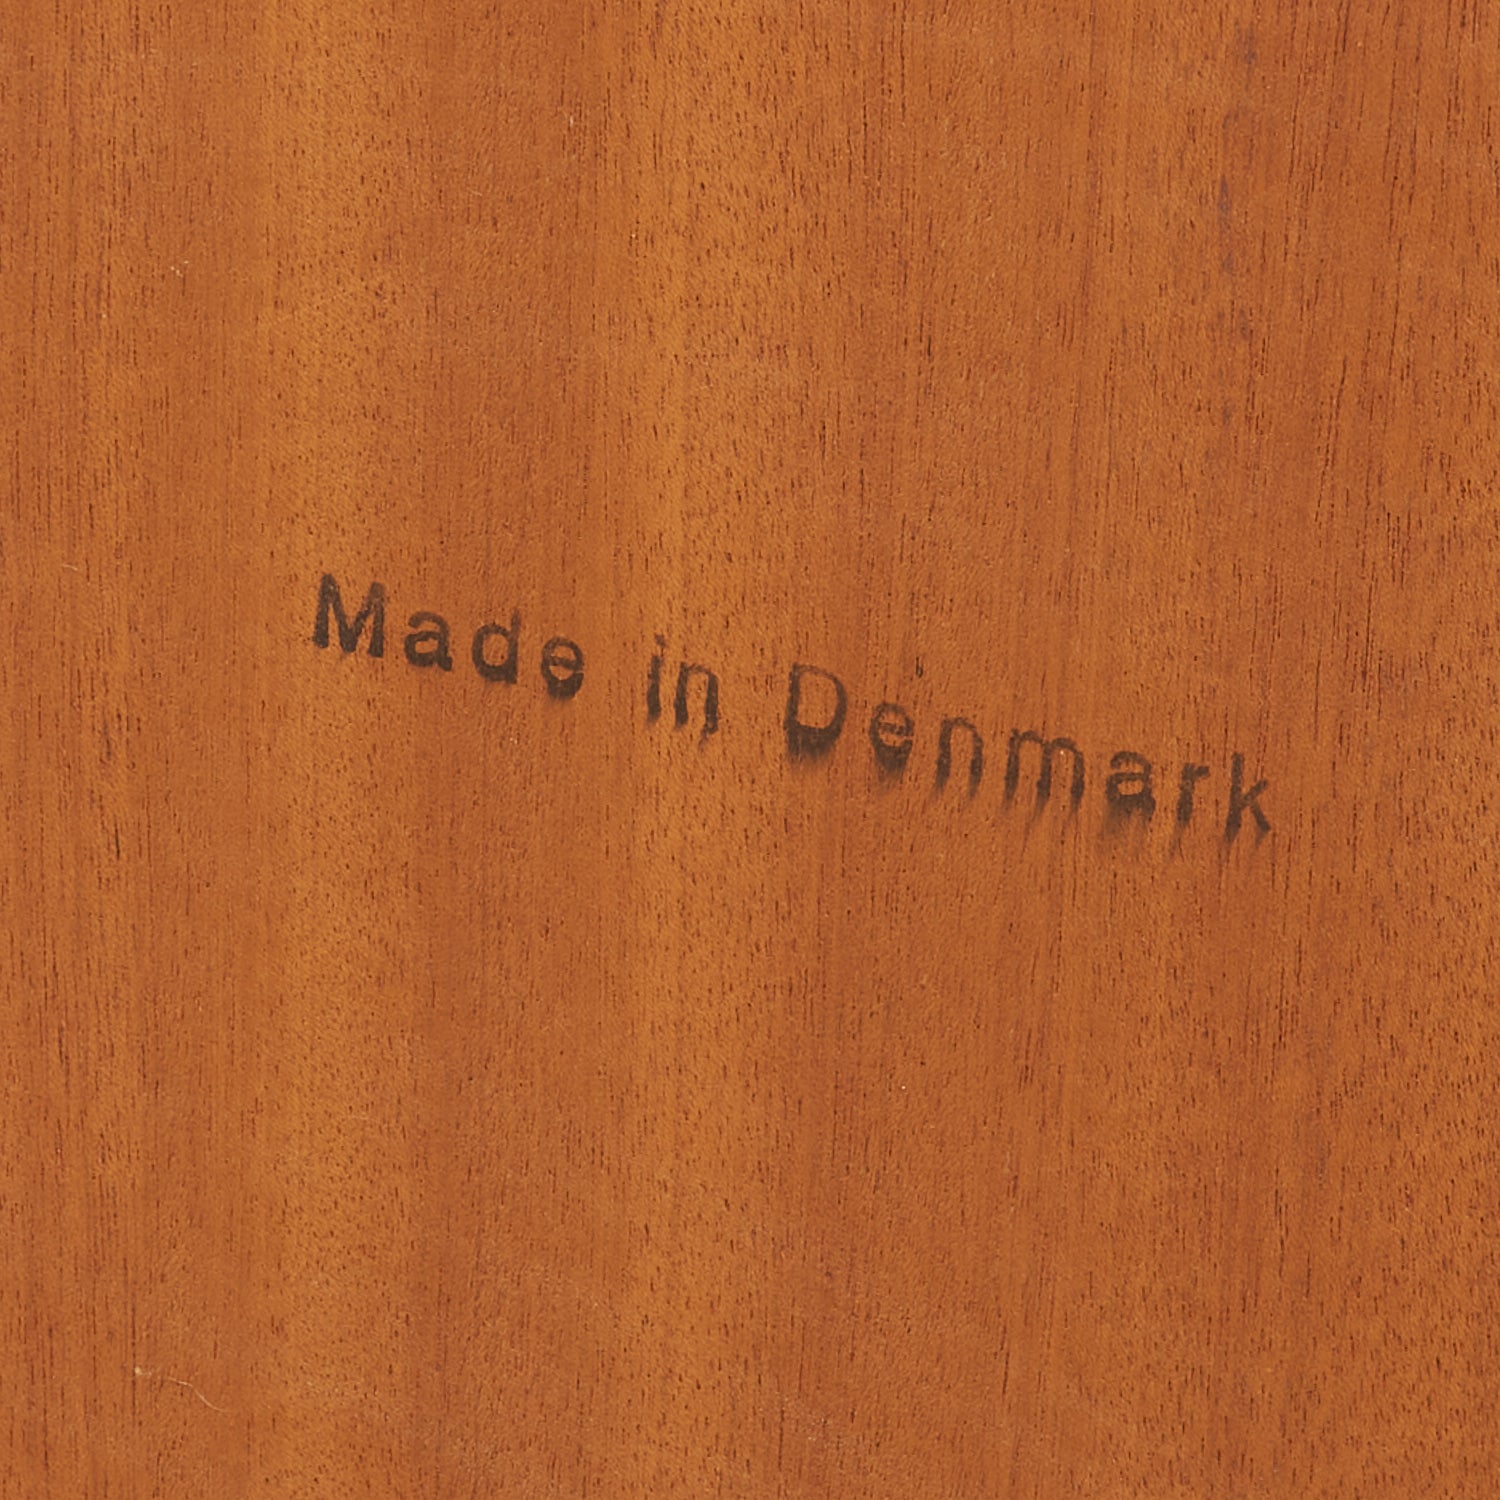 Teak Bookcase w/ Cabinet by Svend Aage Rasmussen, Denmark